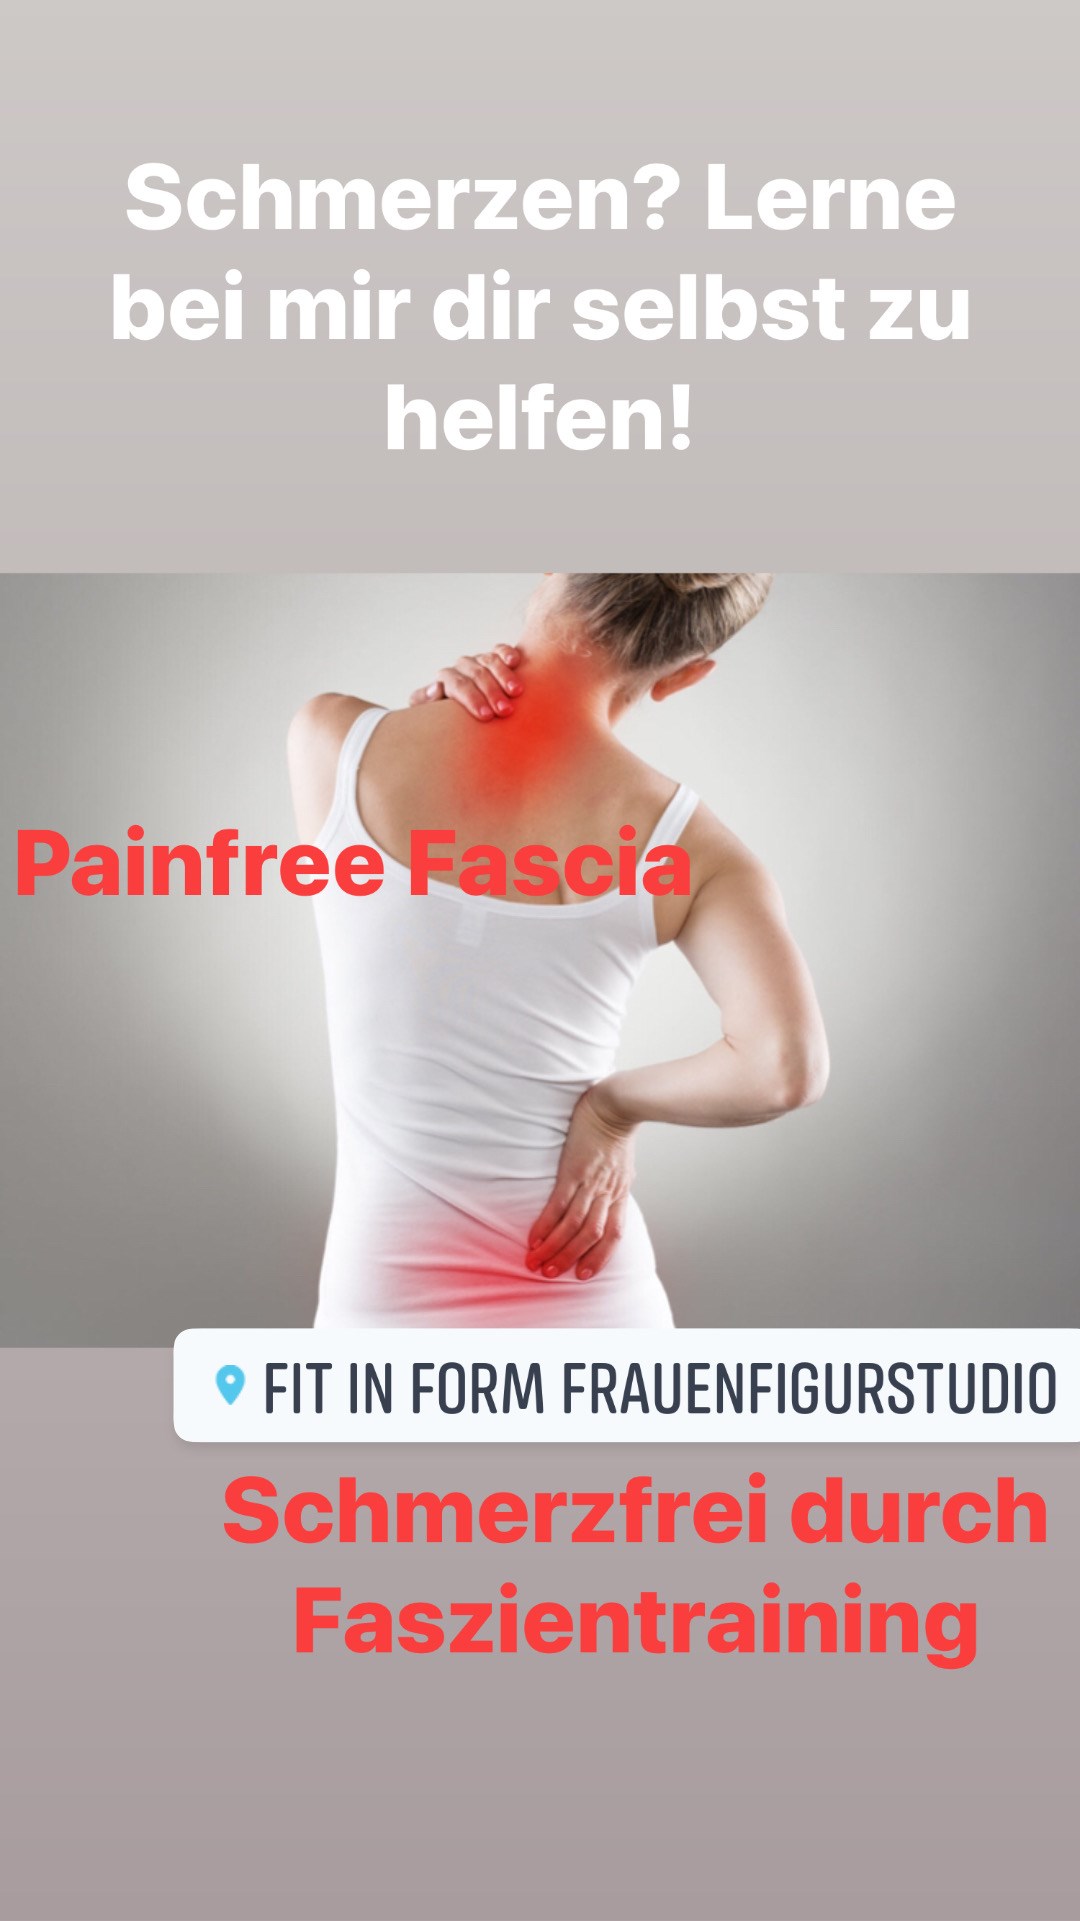 FitnessStudio: Wir bieten Faszientraining und Schmerztherapie - Fit in Form Frauenfigurstudio Ulrike Grey